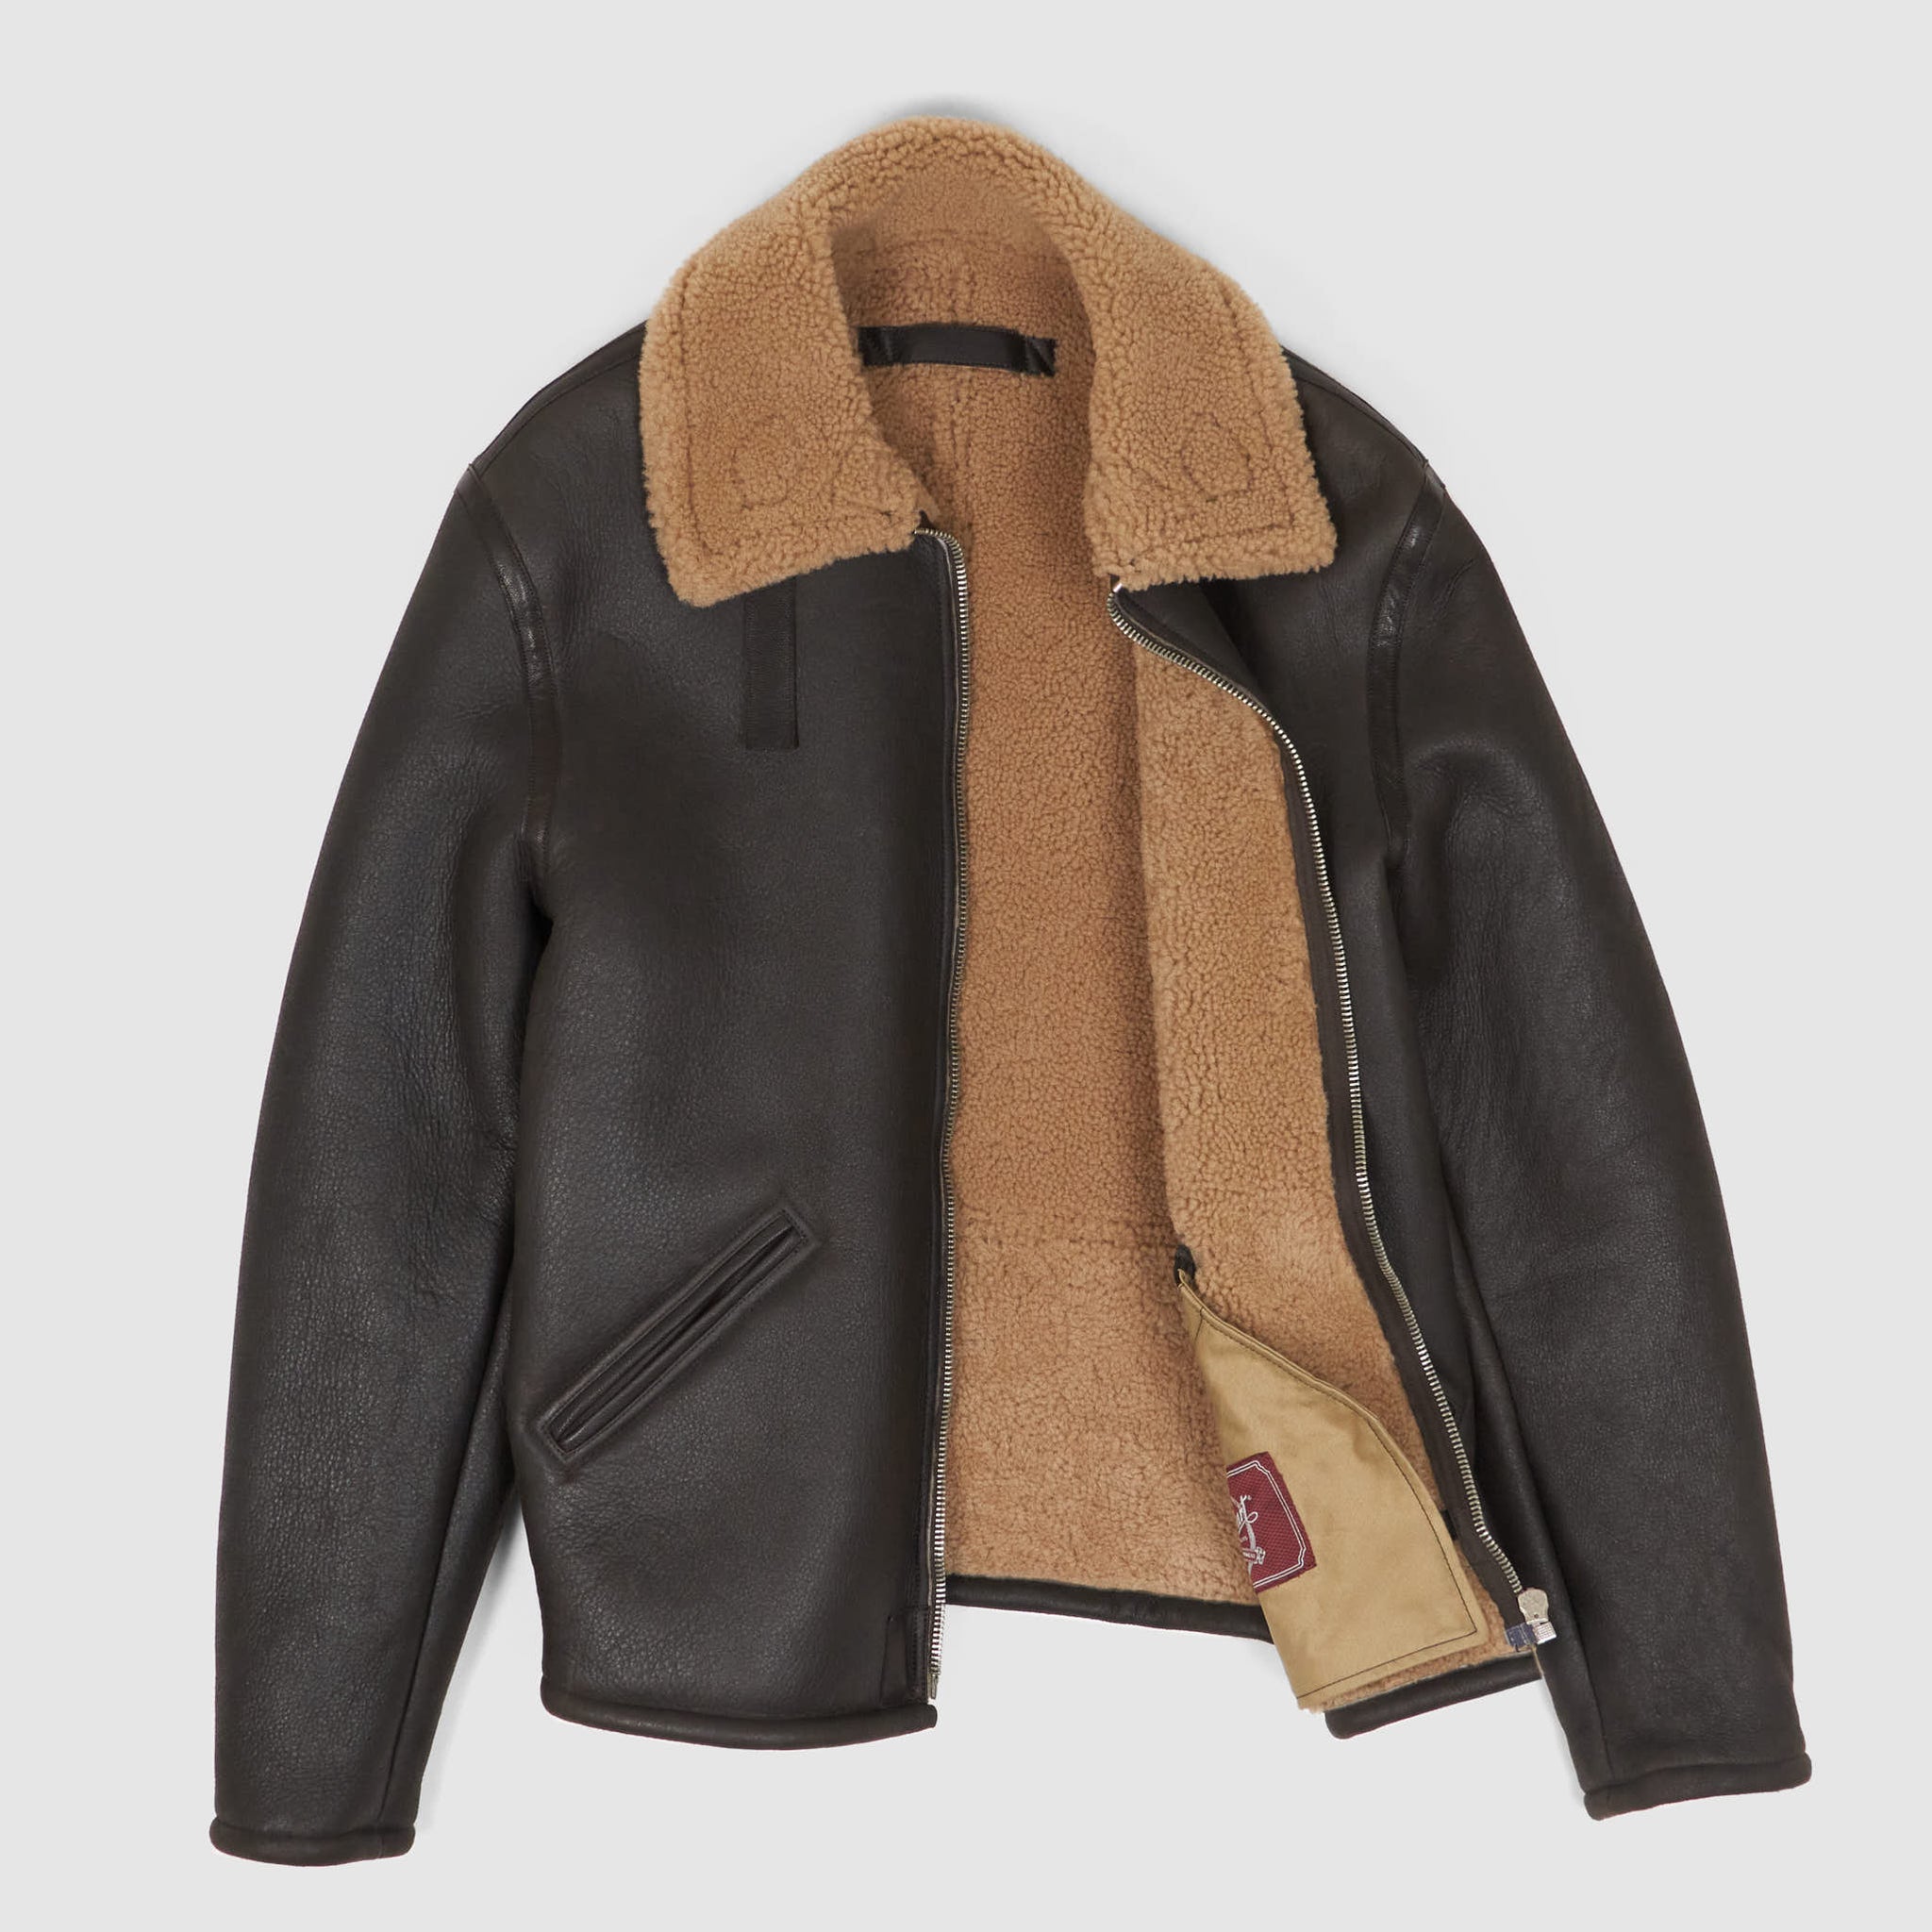 Stewart Shearling Vintage B-6 Bomber Leather Jacket - DeeCee style